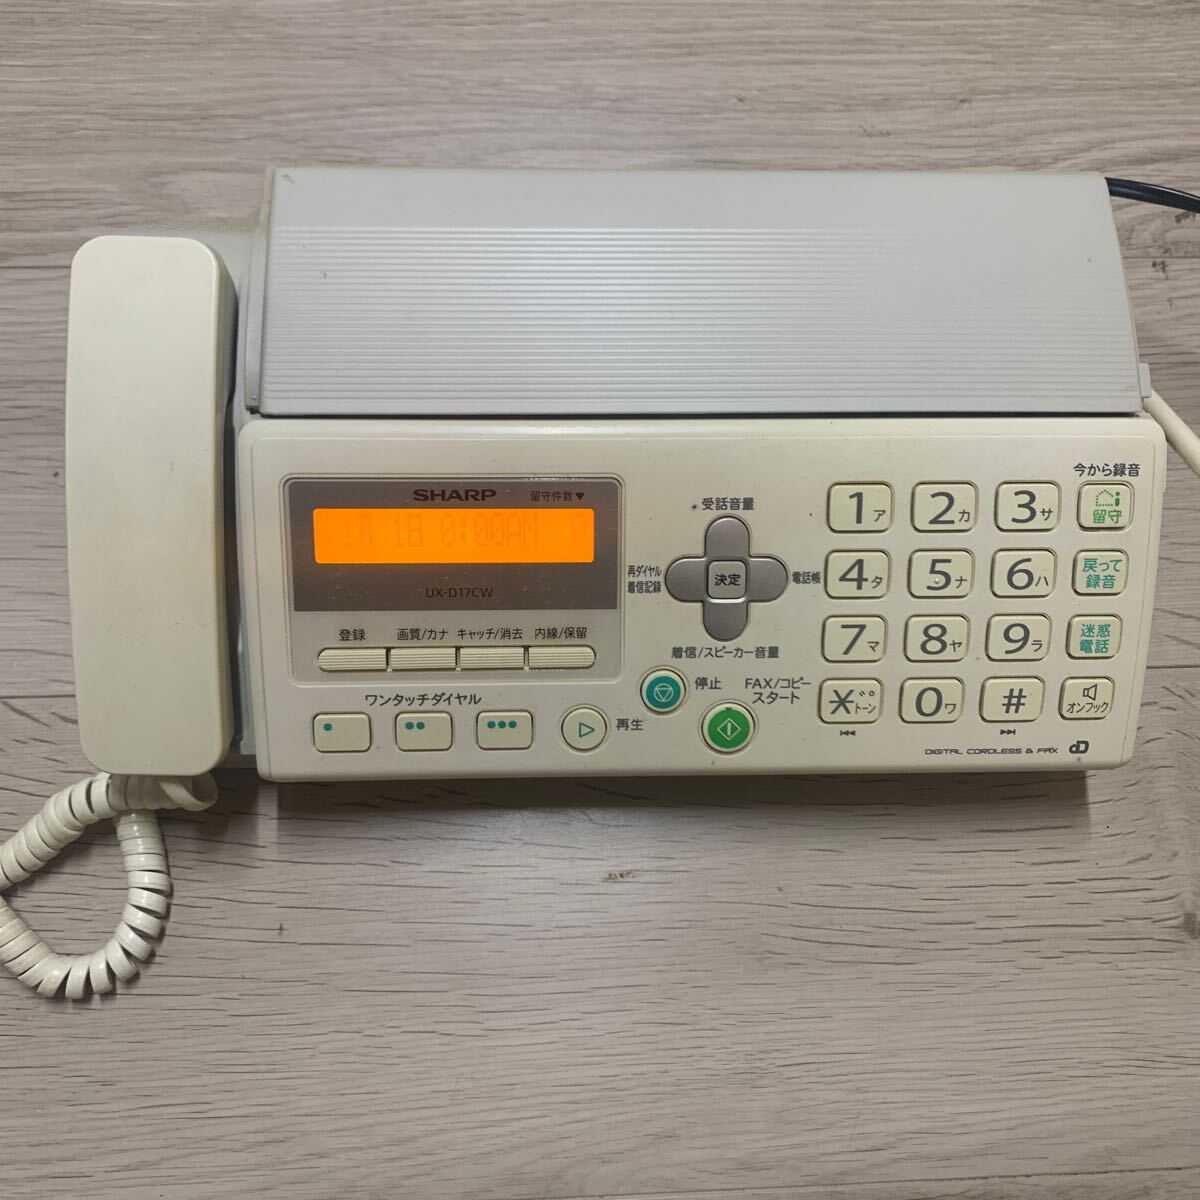  sharp telephone machine fax telephone UX-D17CW (345)